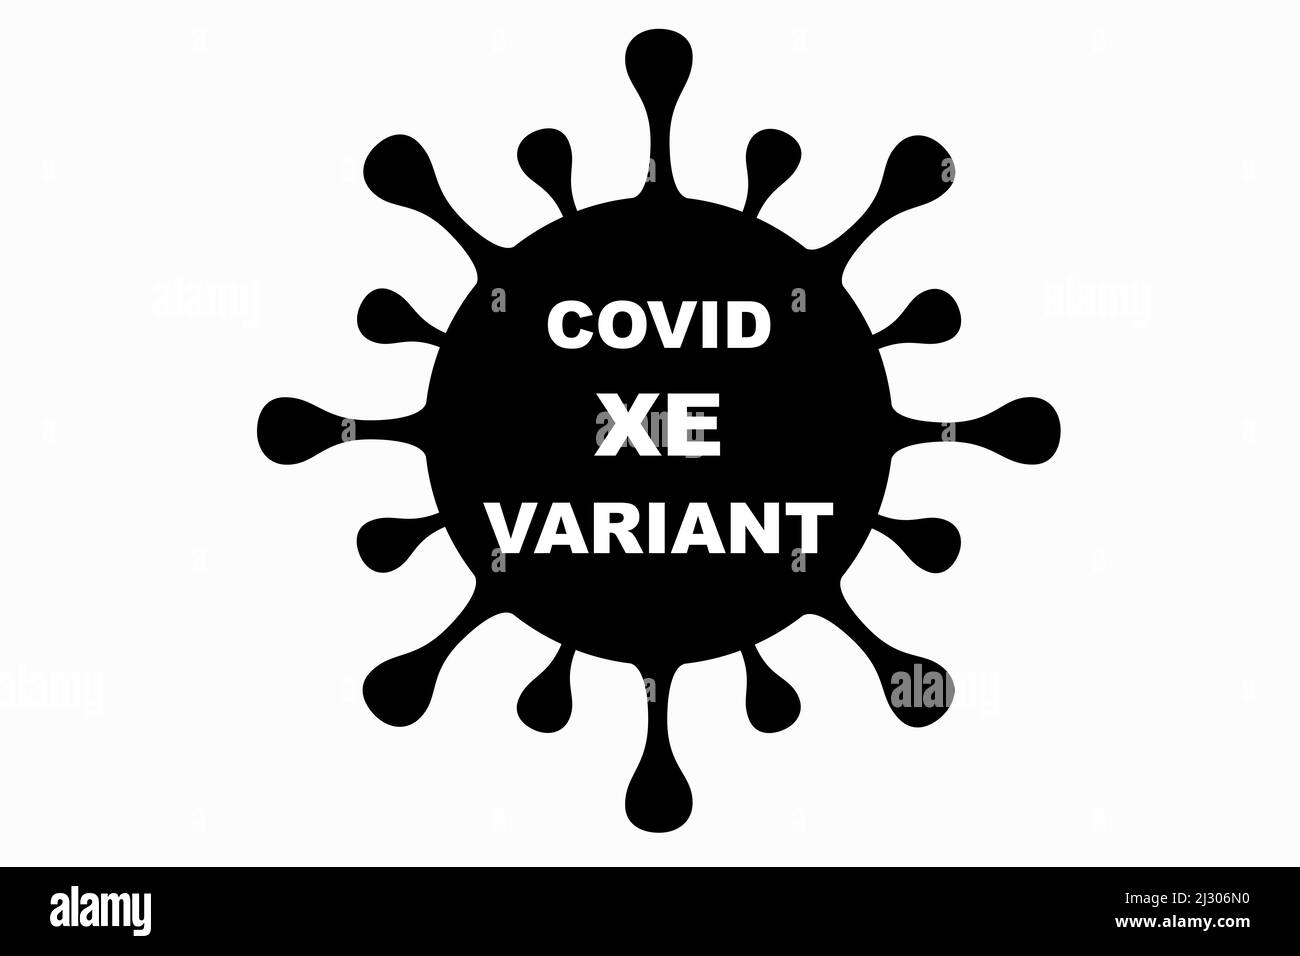 XE. New variant of the SARS-CoV-2 coronavirus. Subvariant of Omicron. Design horizontal. Virus design and black text. Illustration. Stock Photo